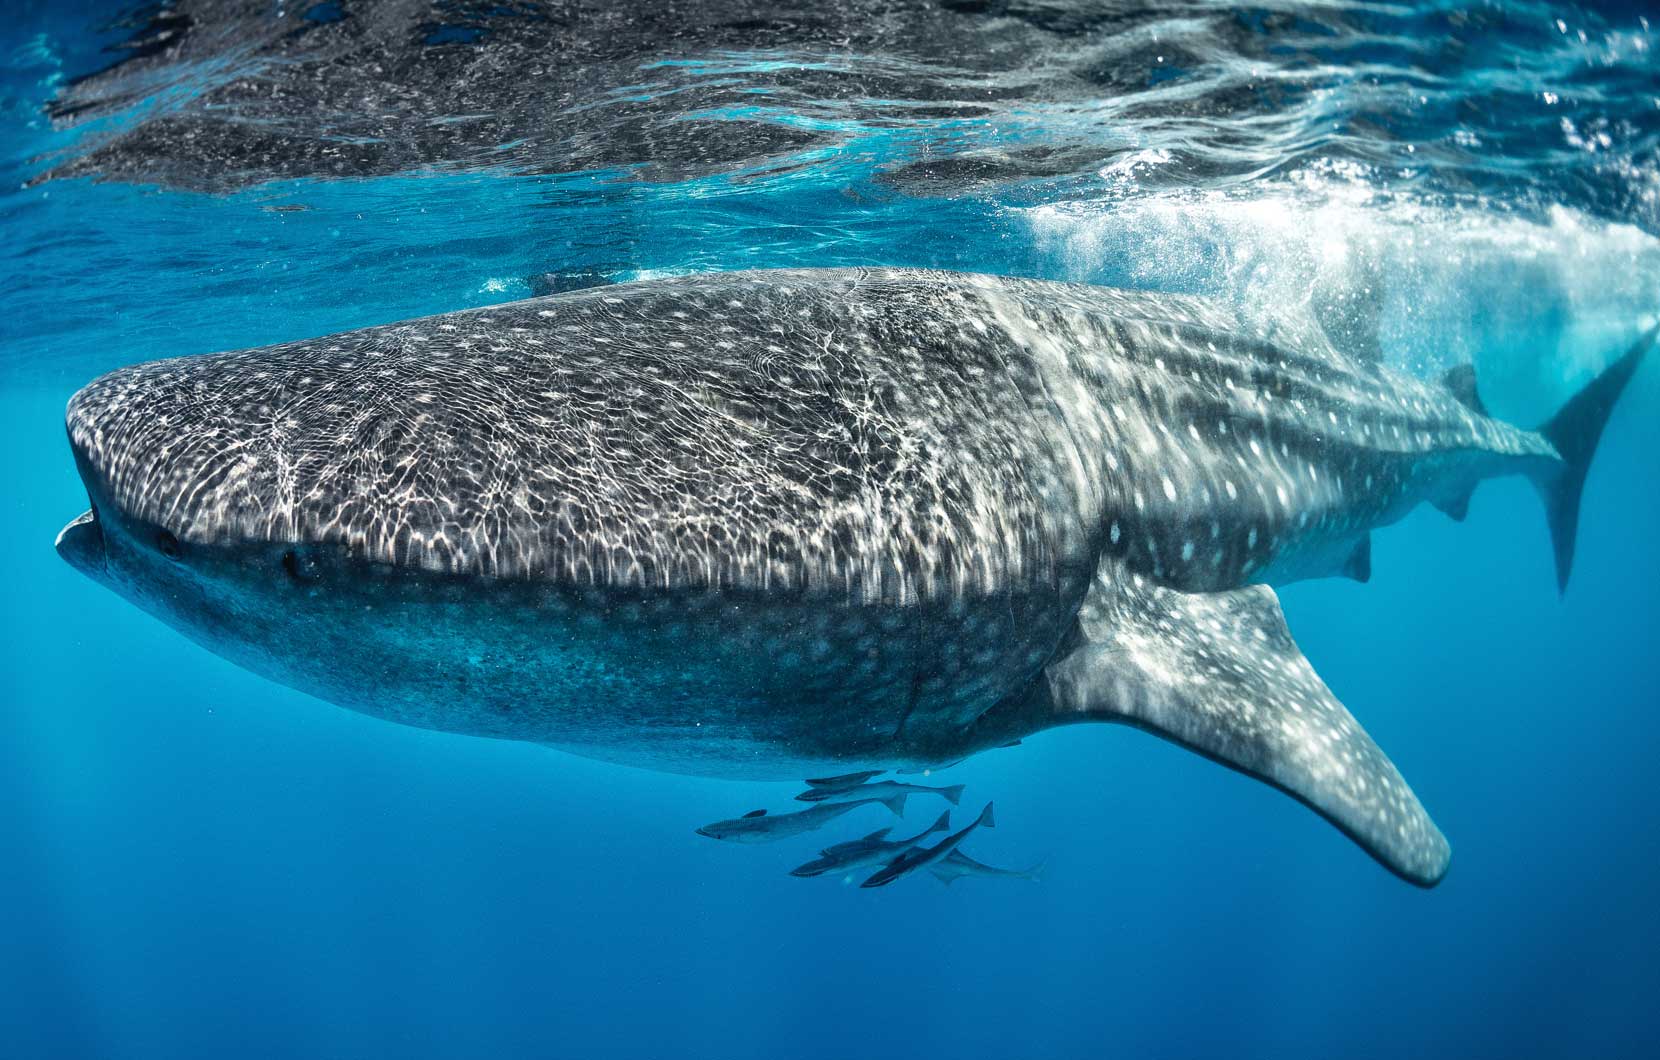 The world's largest fish, seen here swimming along the Riviera Maya coast.